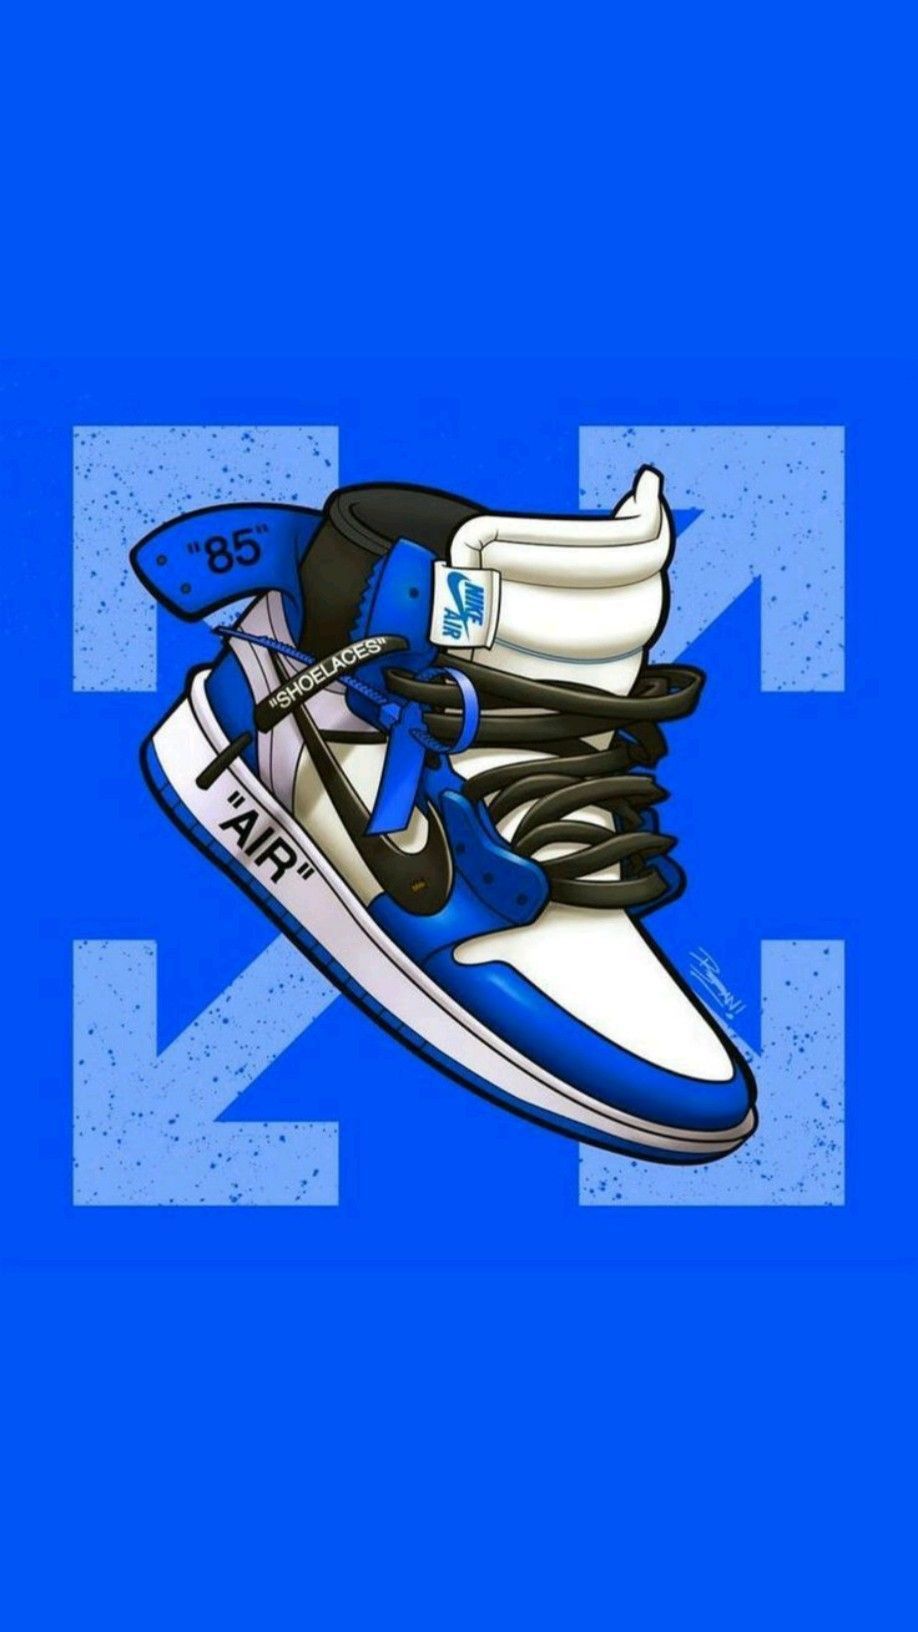 Jordan 1 shoes on a blue background - Shoes